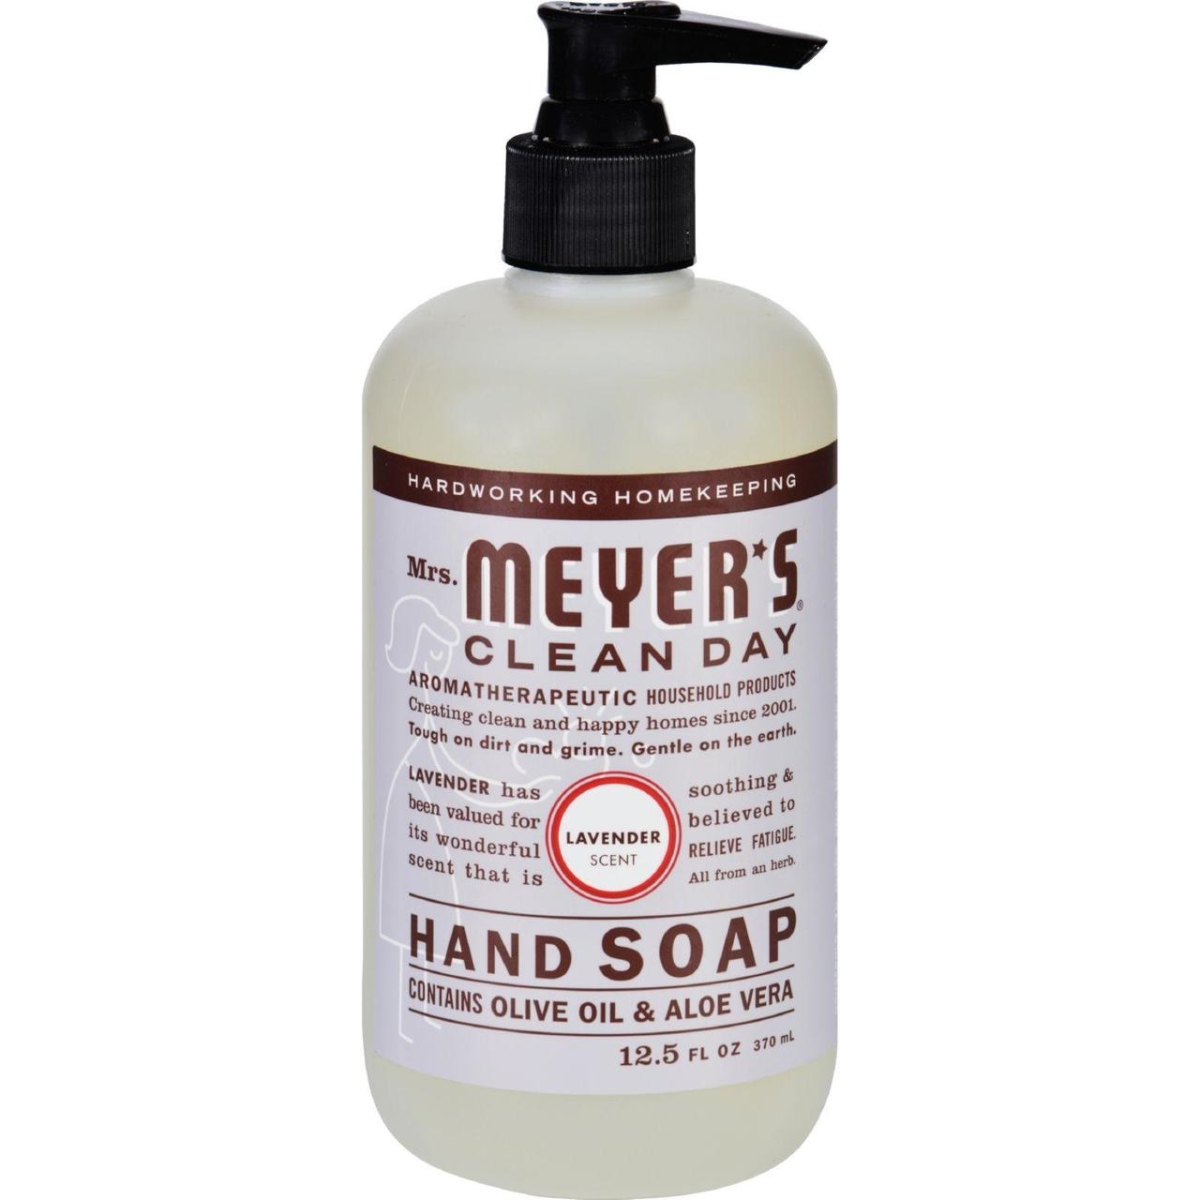 Hg0814343 12.5 Oz Liquid Hand Soap, Lavender - Case Of 6